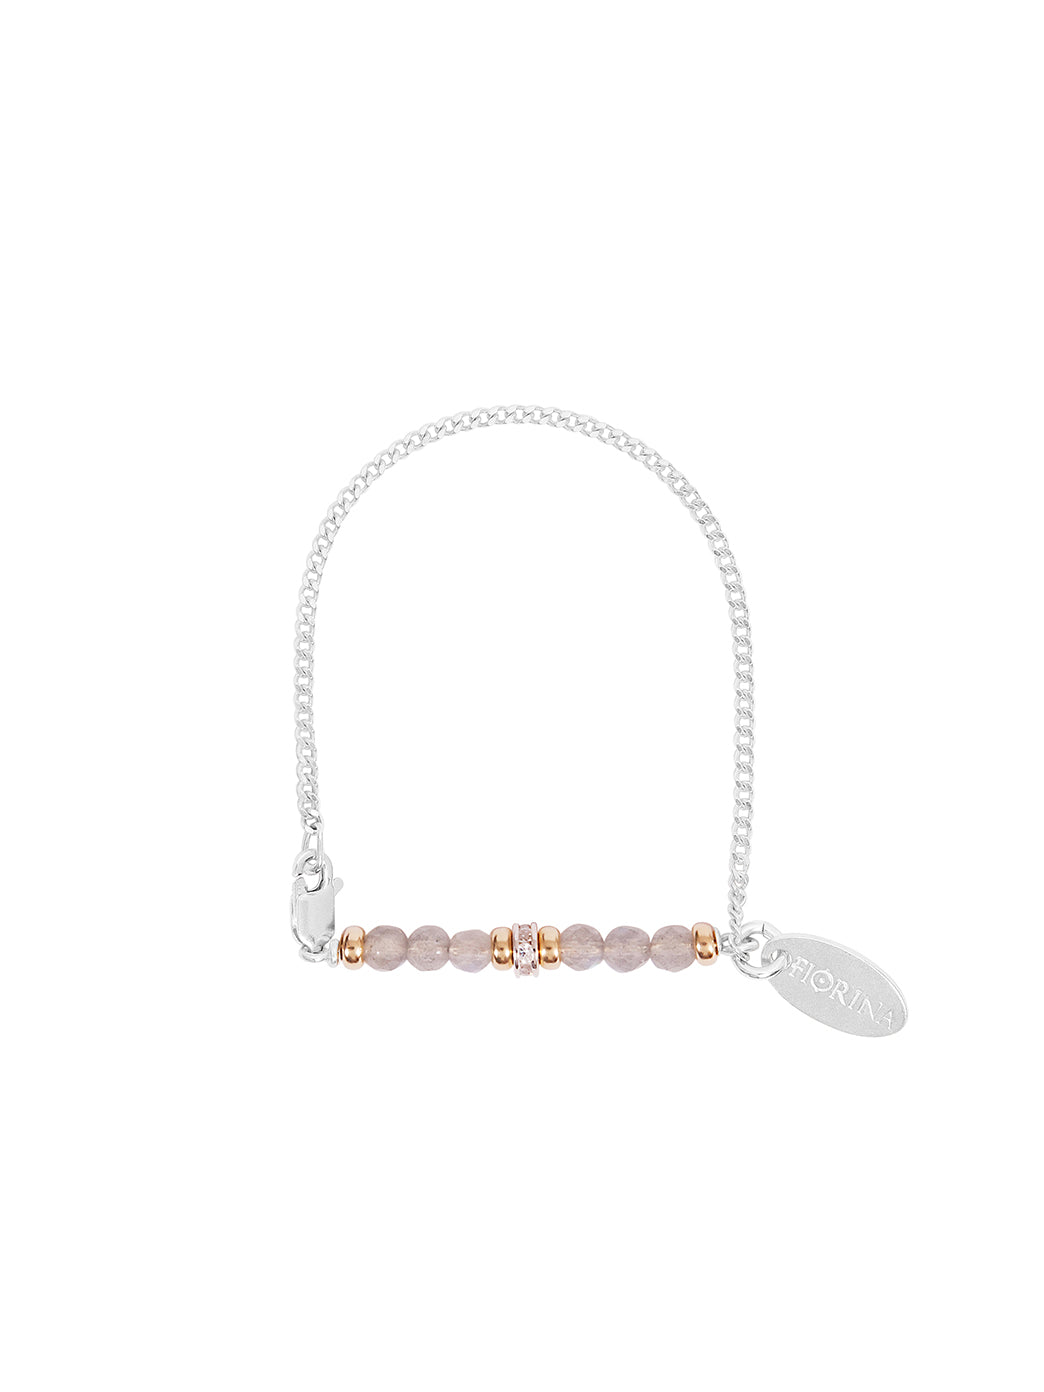 Fiorina Jewellery Romance Bracelet Moonstone